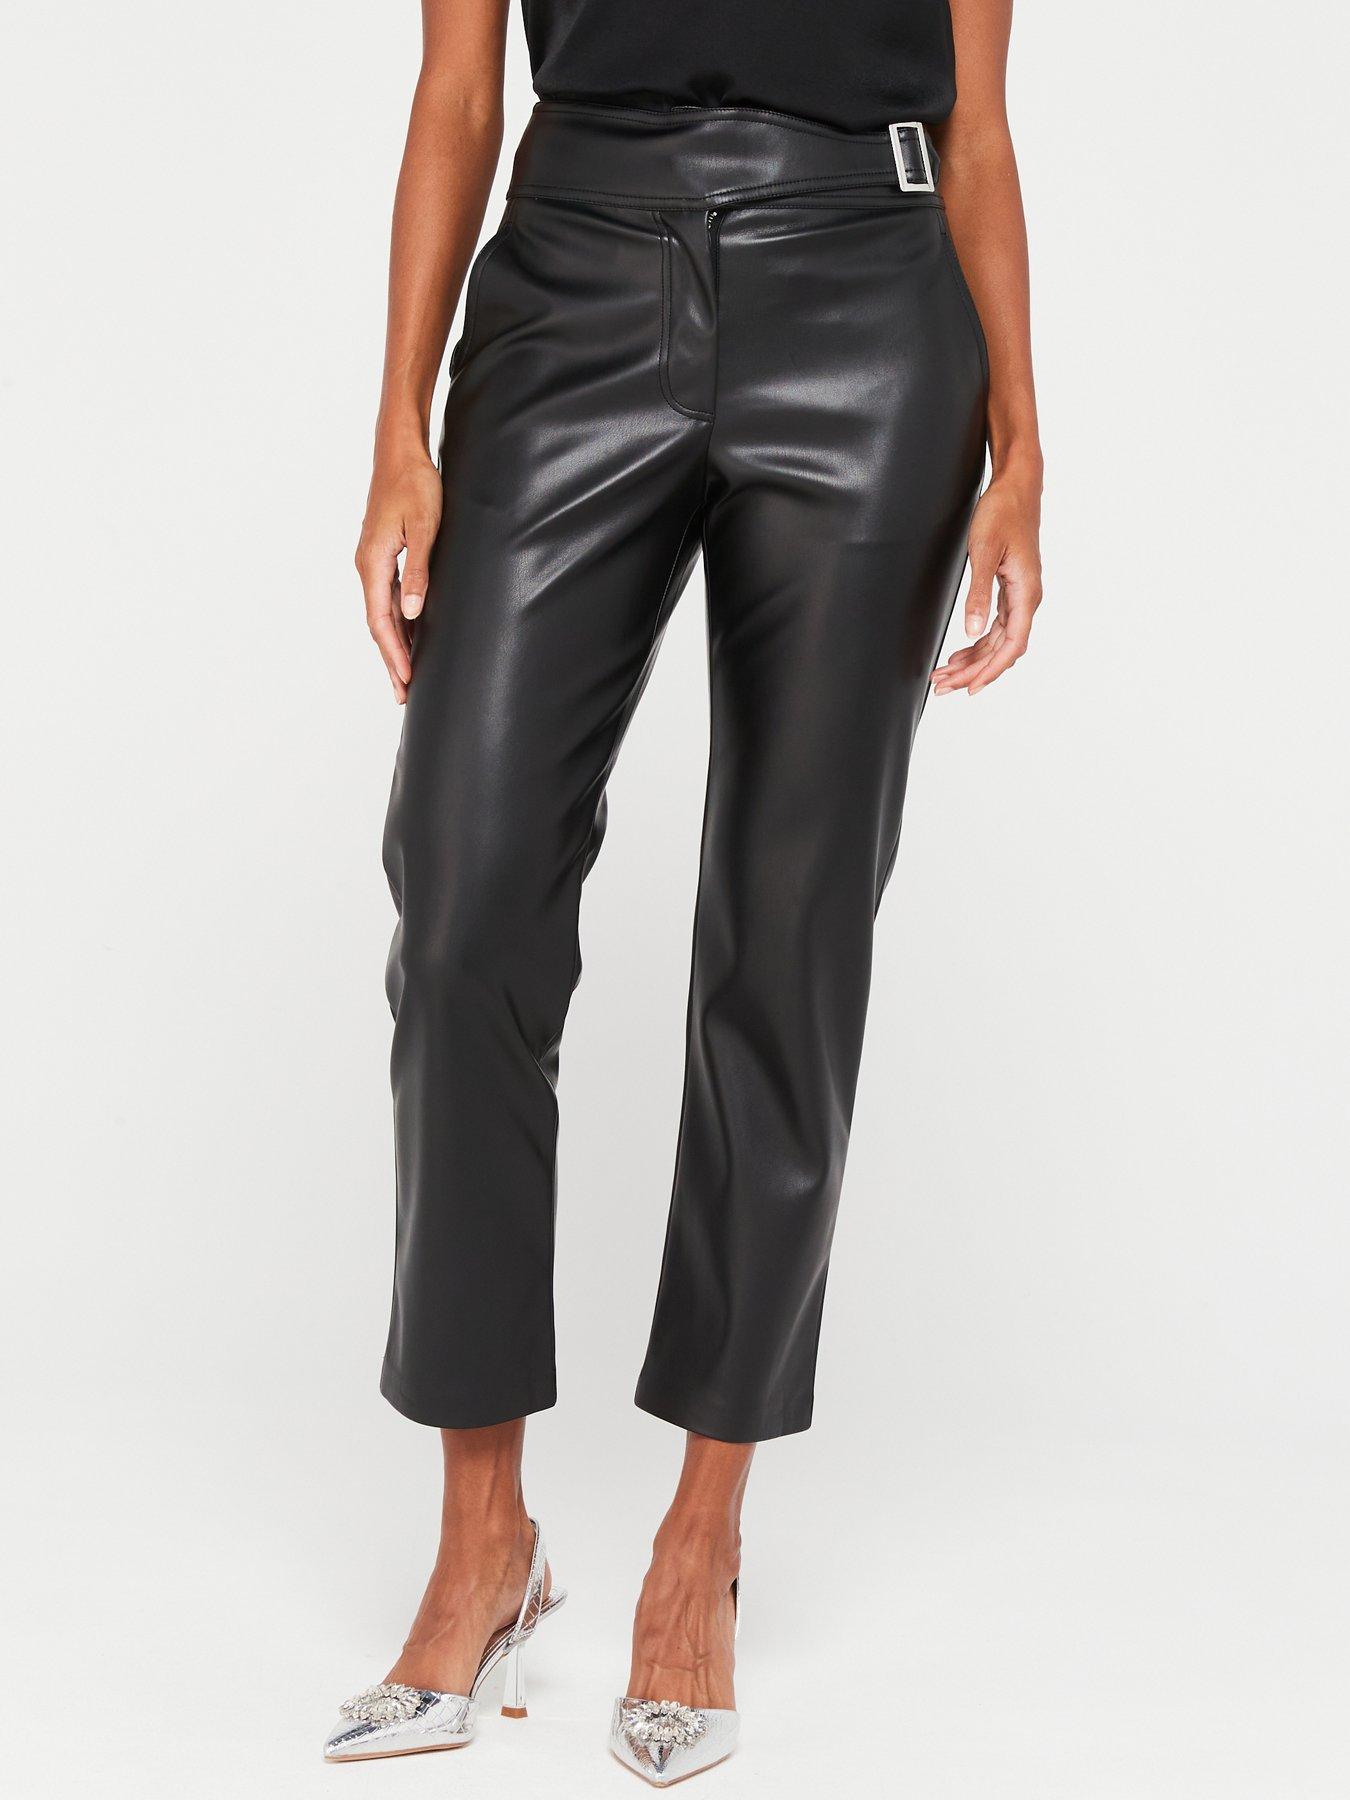 https://media.very.co.uk/i/very/VL94Z_SQ1_0000000004_BLACK_MDf/v-by-very-faux-leather-wrap-waist-trousers-black.jpg?$180x240_retinamobilex2$